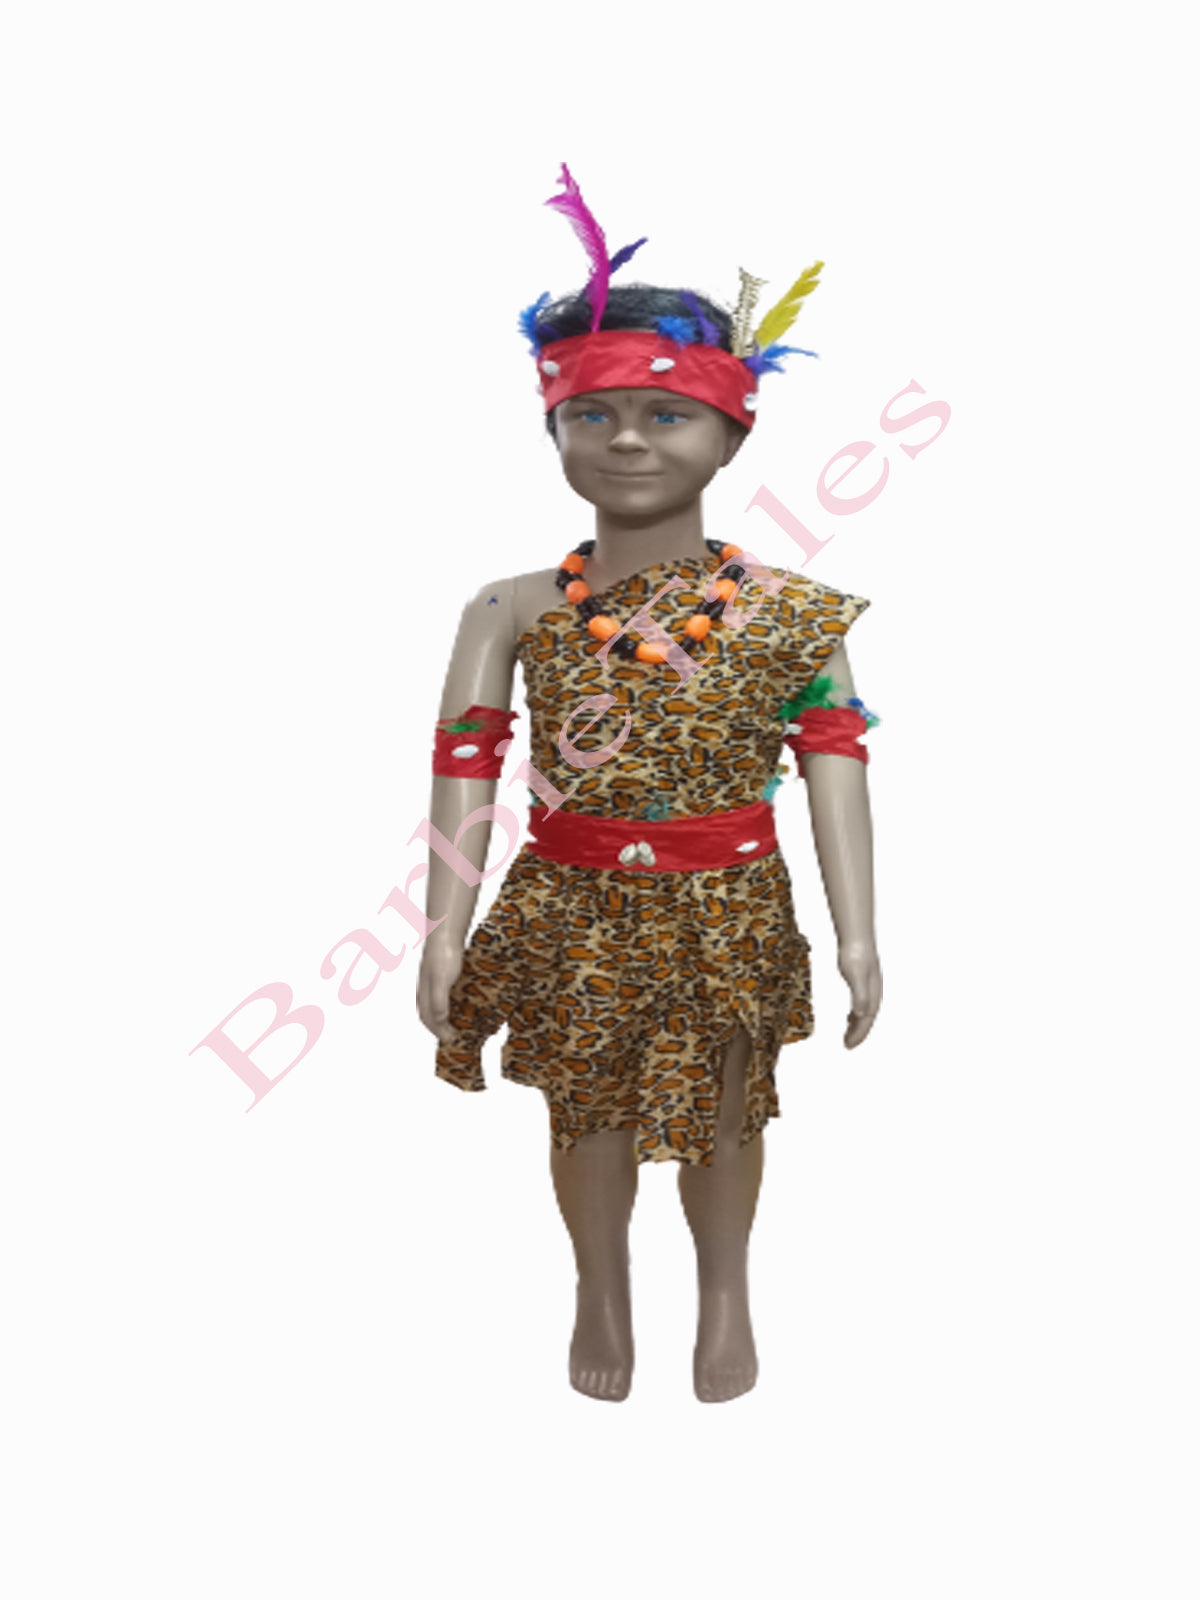 KAKU FANCY DRESSES Tribal Dance Costume for Kids -Multicolour, 5-6 Years,  For Girls Kids Costume Wear Price in India - Buy KAKU FANCY DRESSES Tribal  Dance Costume for Kids -Multicolour, 5-6 Years,